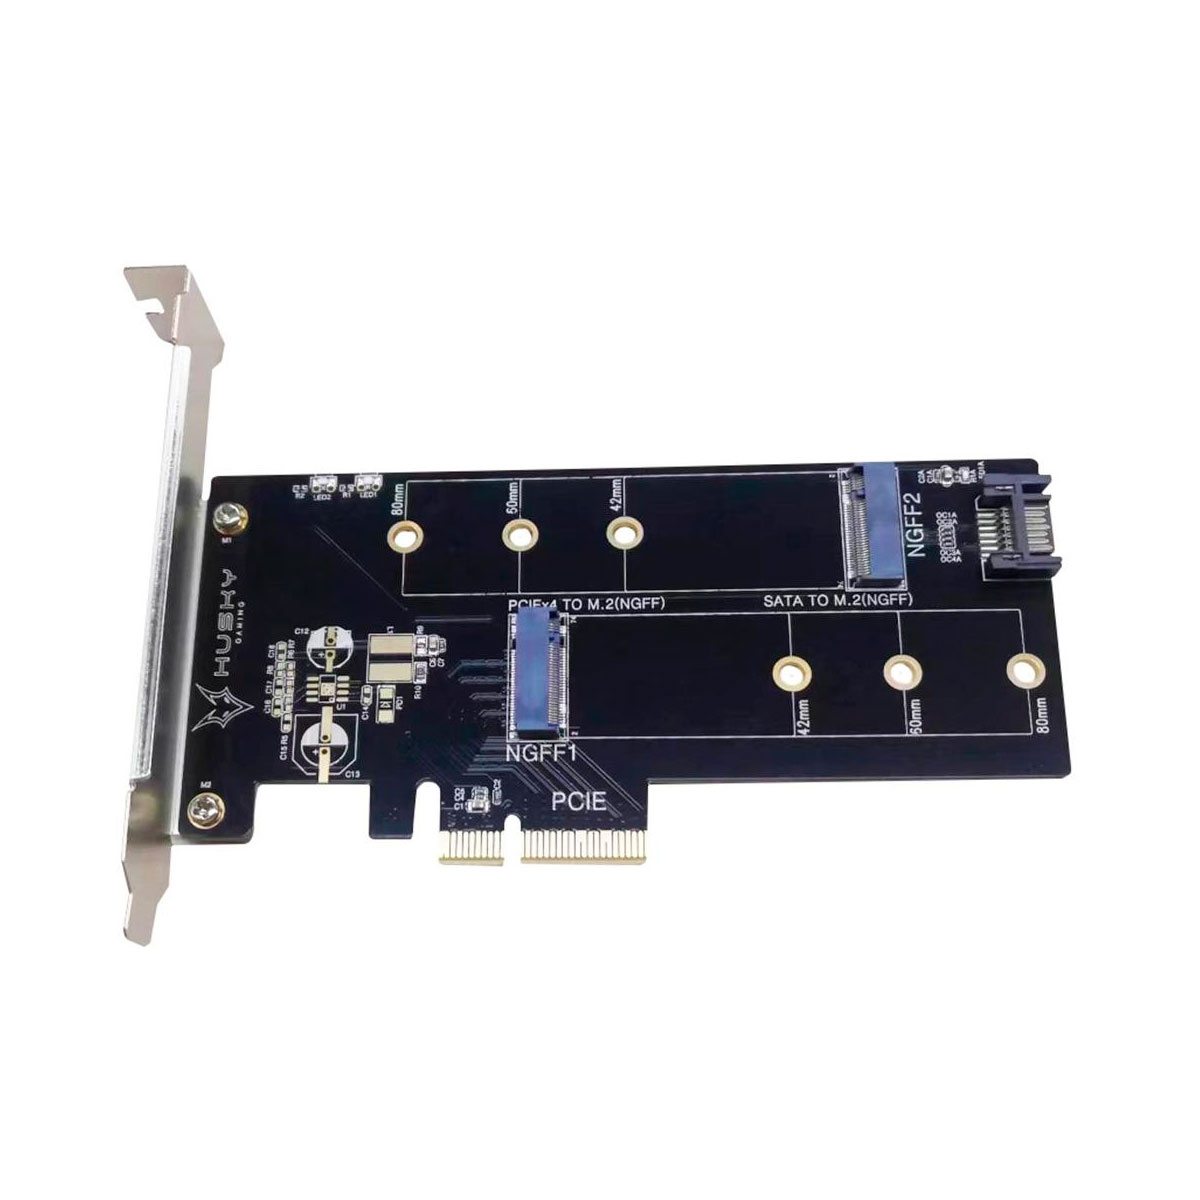 Placa Controladora M.2 NVMe e SATA para PCI-E x4 - 2 slots M.2 - Storm 100 HGML014